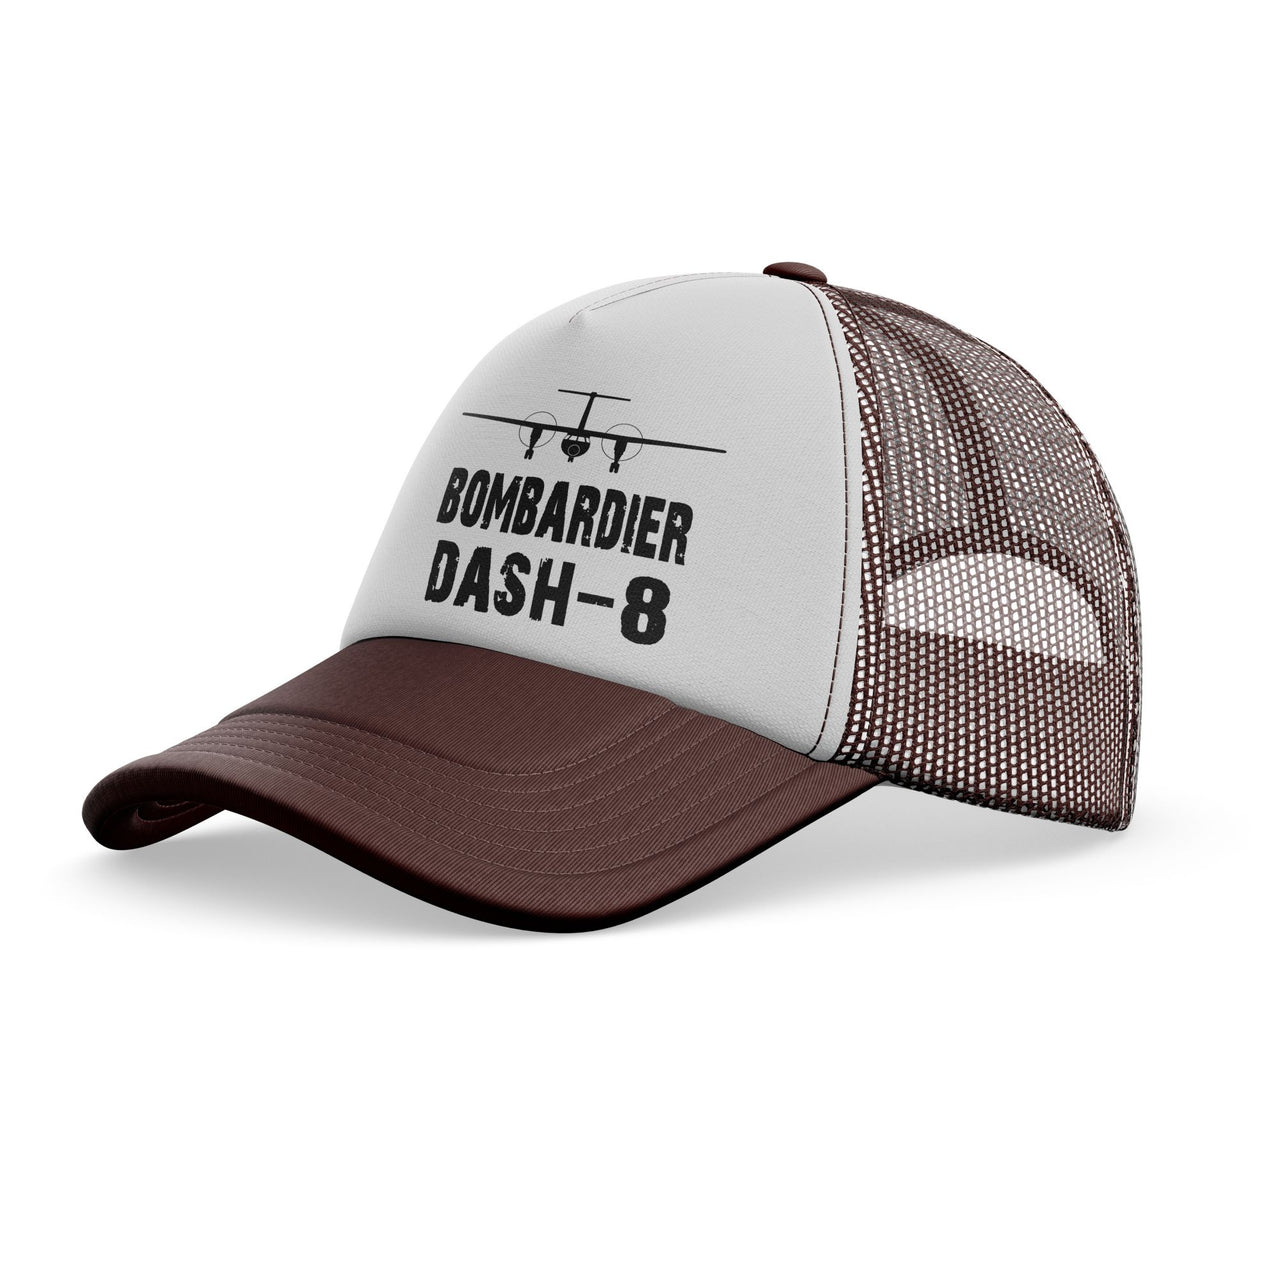 Bombardier Dash-8 & Plane Designed Trucker Caps & Hats